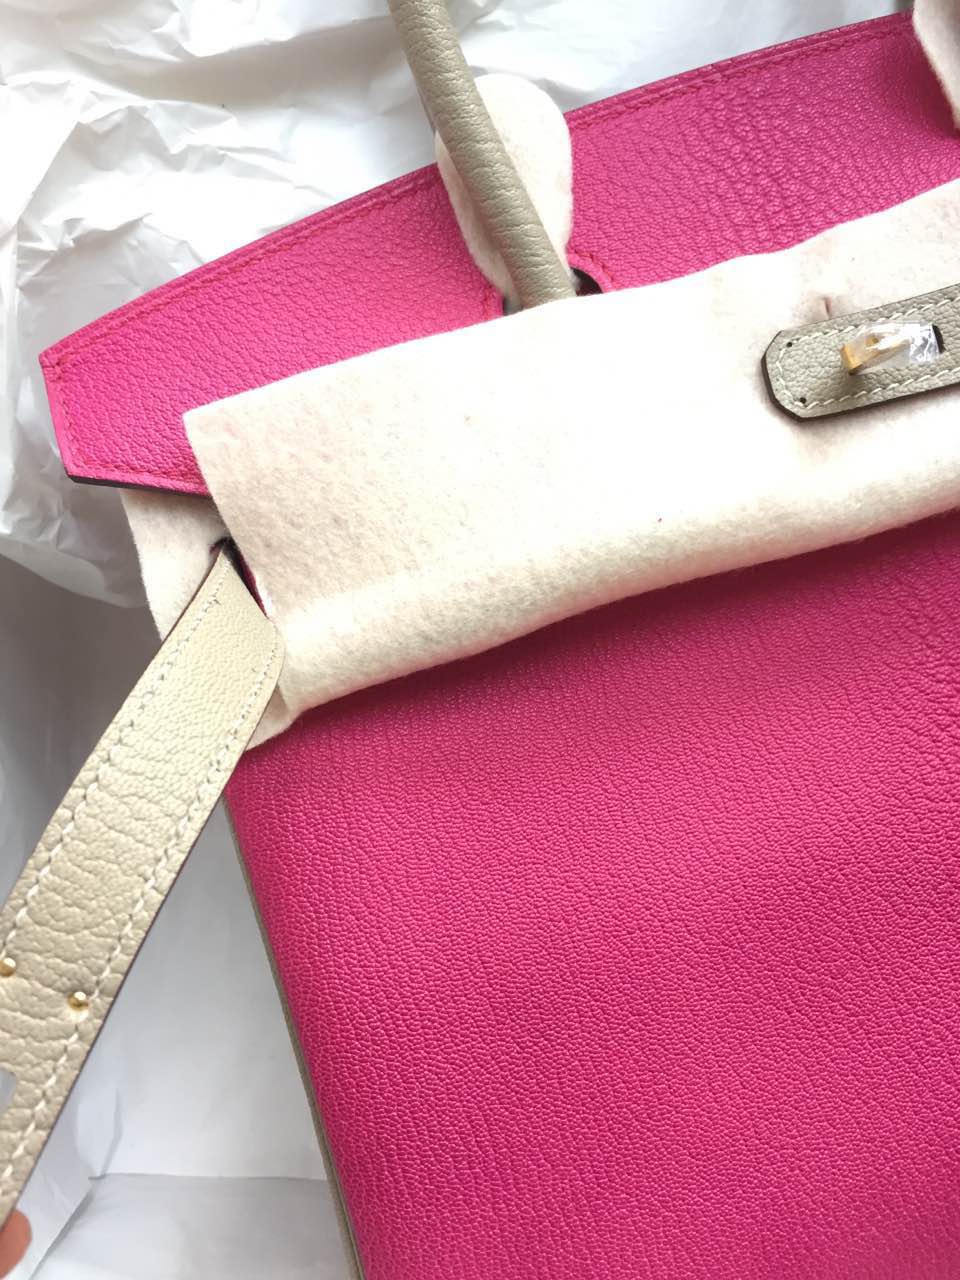 30cm Hermes Birkin Bag E5 Rose Tyrien/Light Grey Chevre Leather Tote Bag